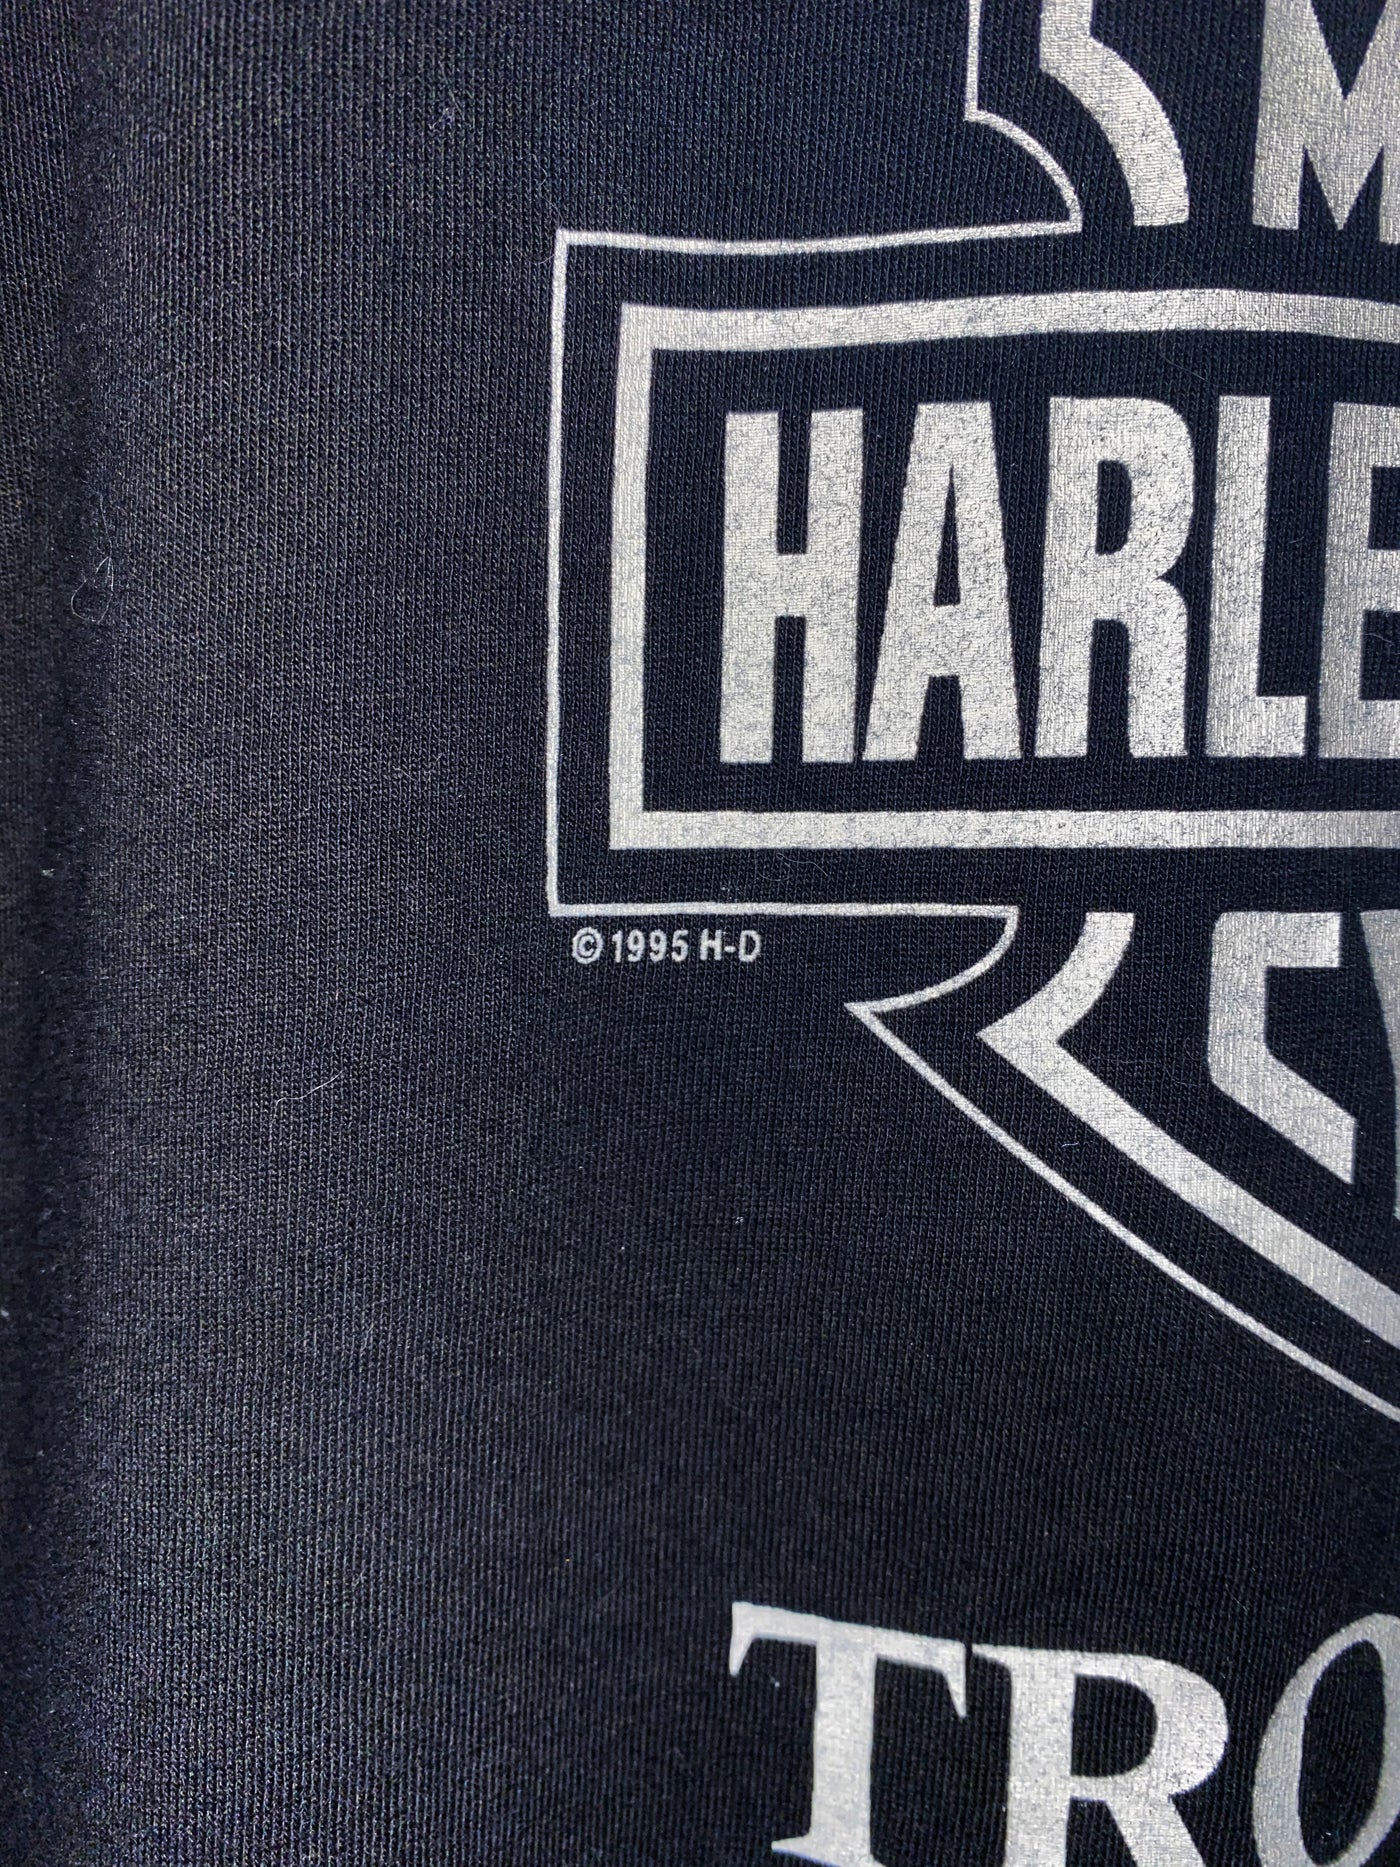 Vintage 1995 Harley Davidson Emblem T-Shirt